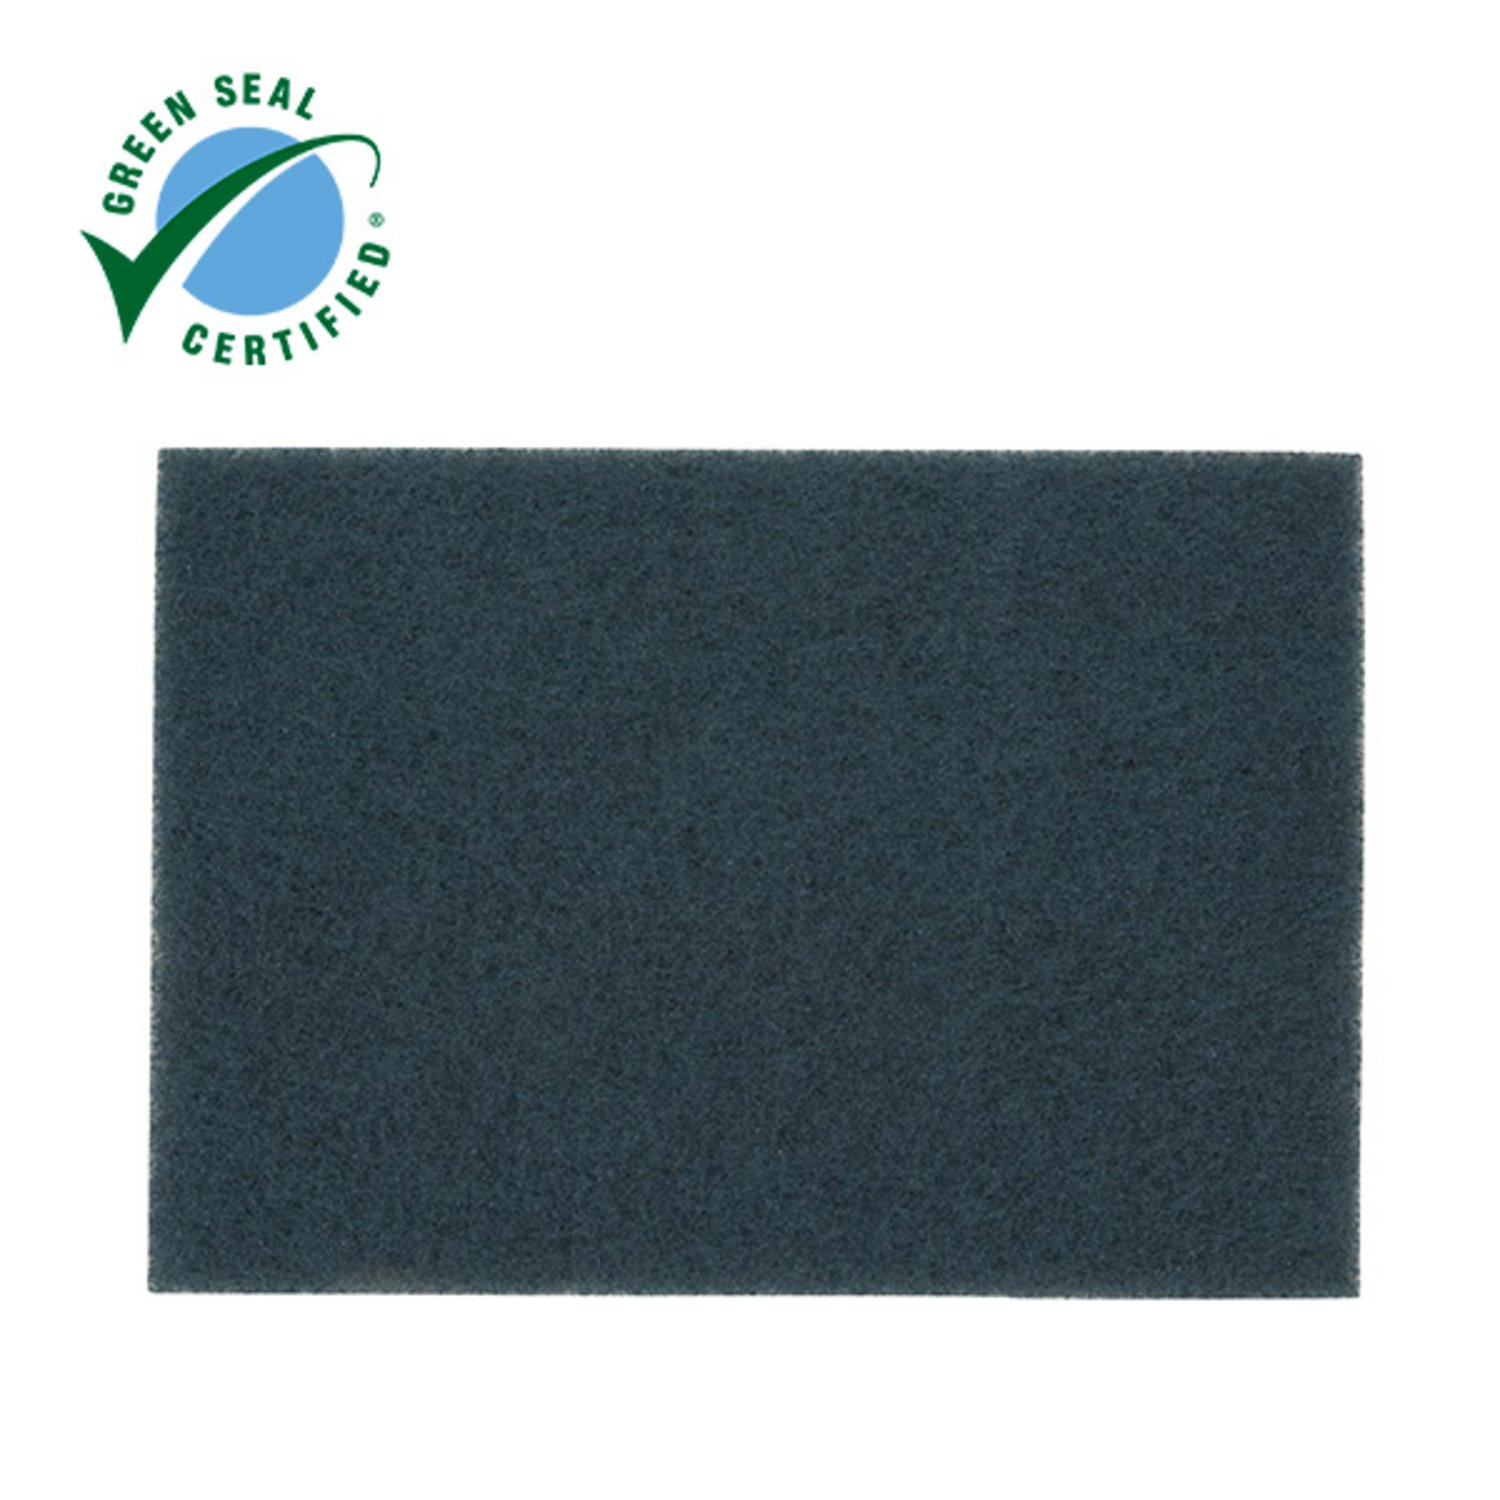 7000126842 - 3M Blue Cleaner Pad 5300, 32 in x 14 in, 10/Case